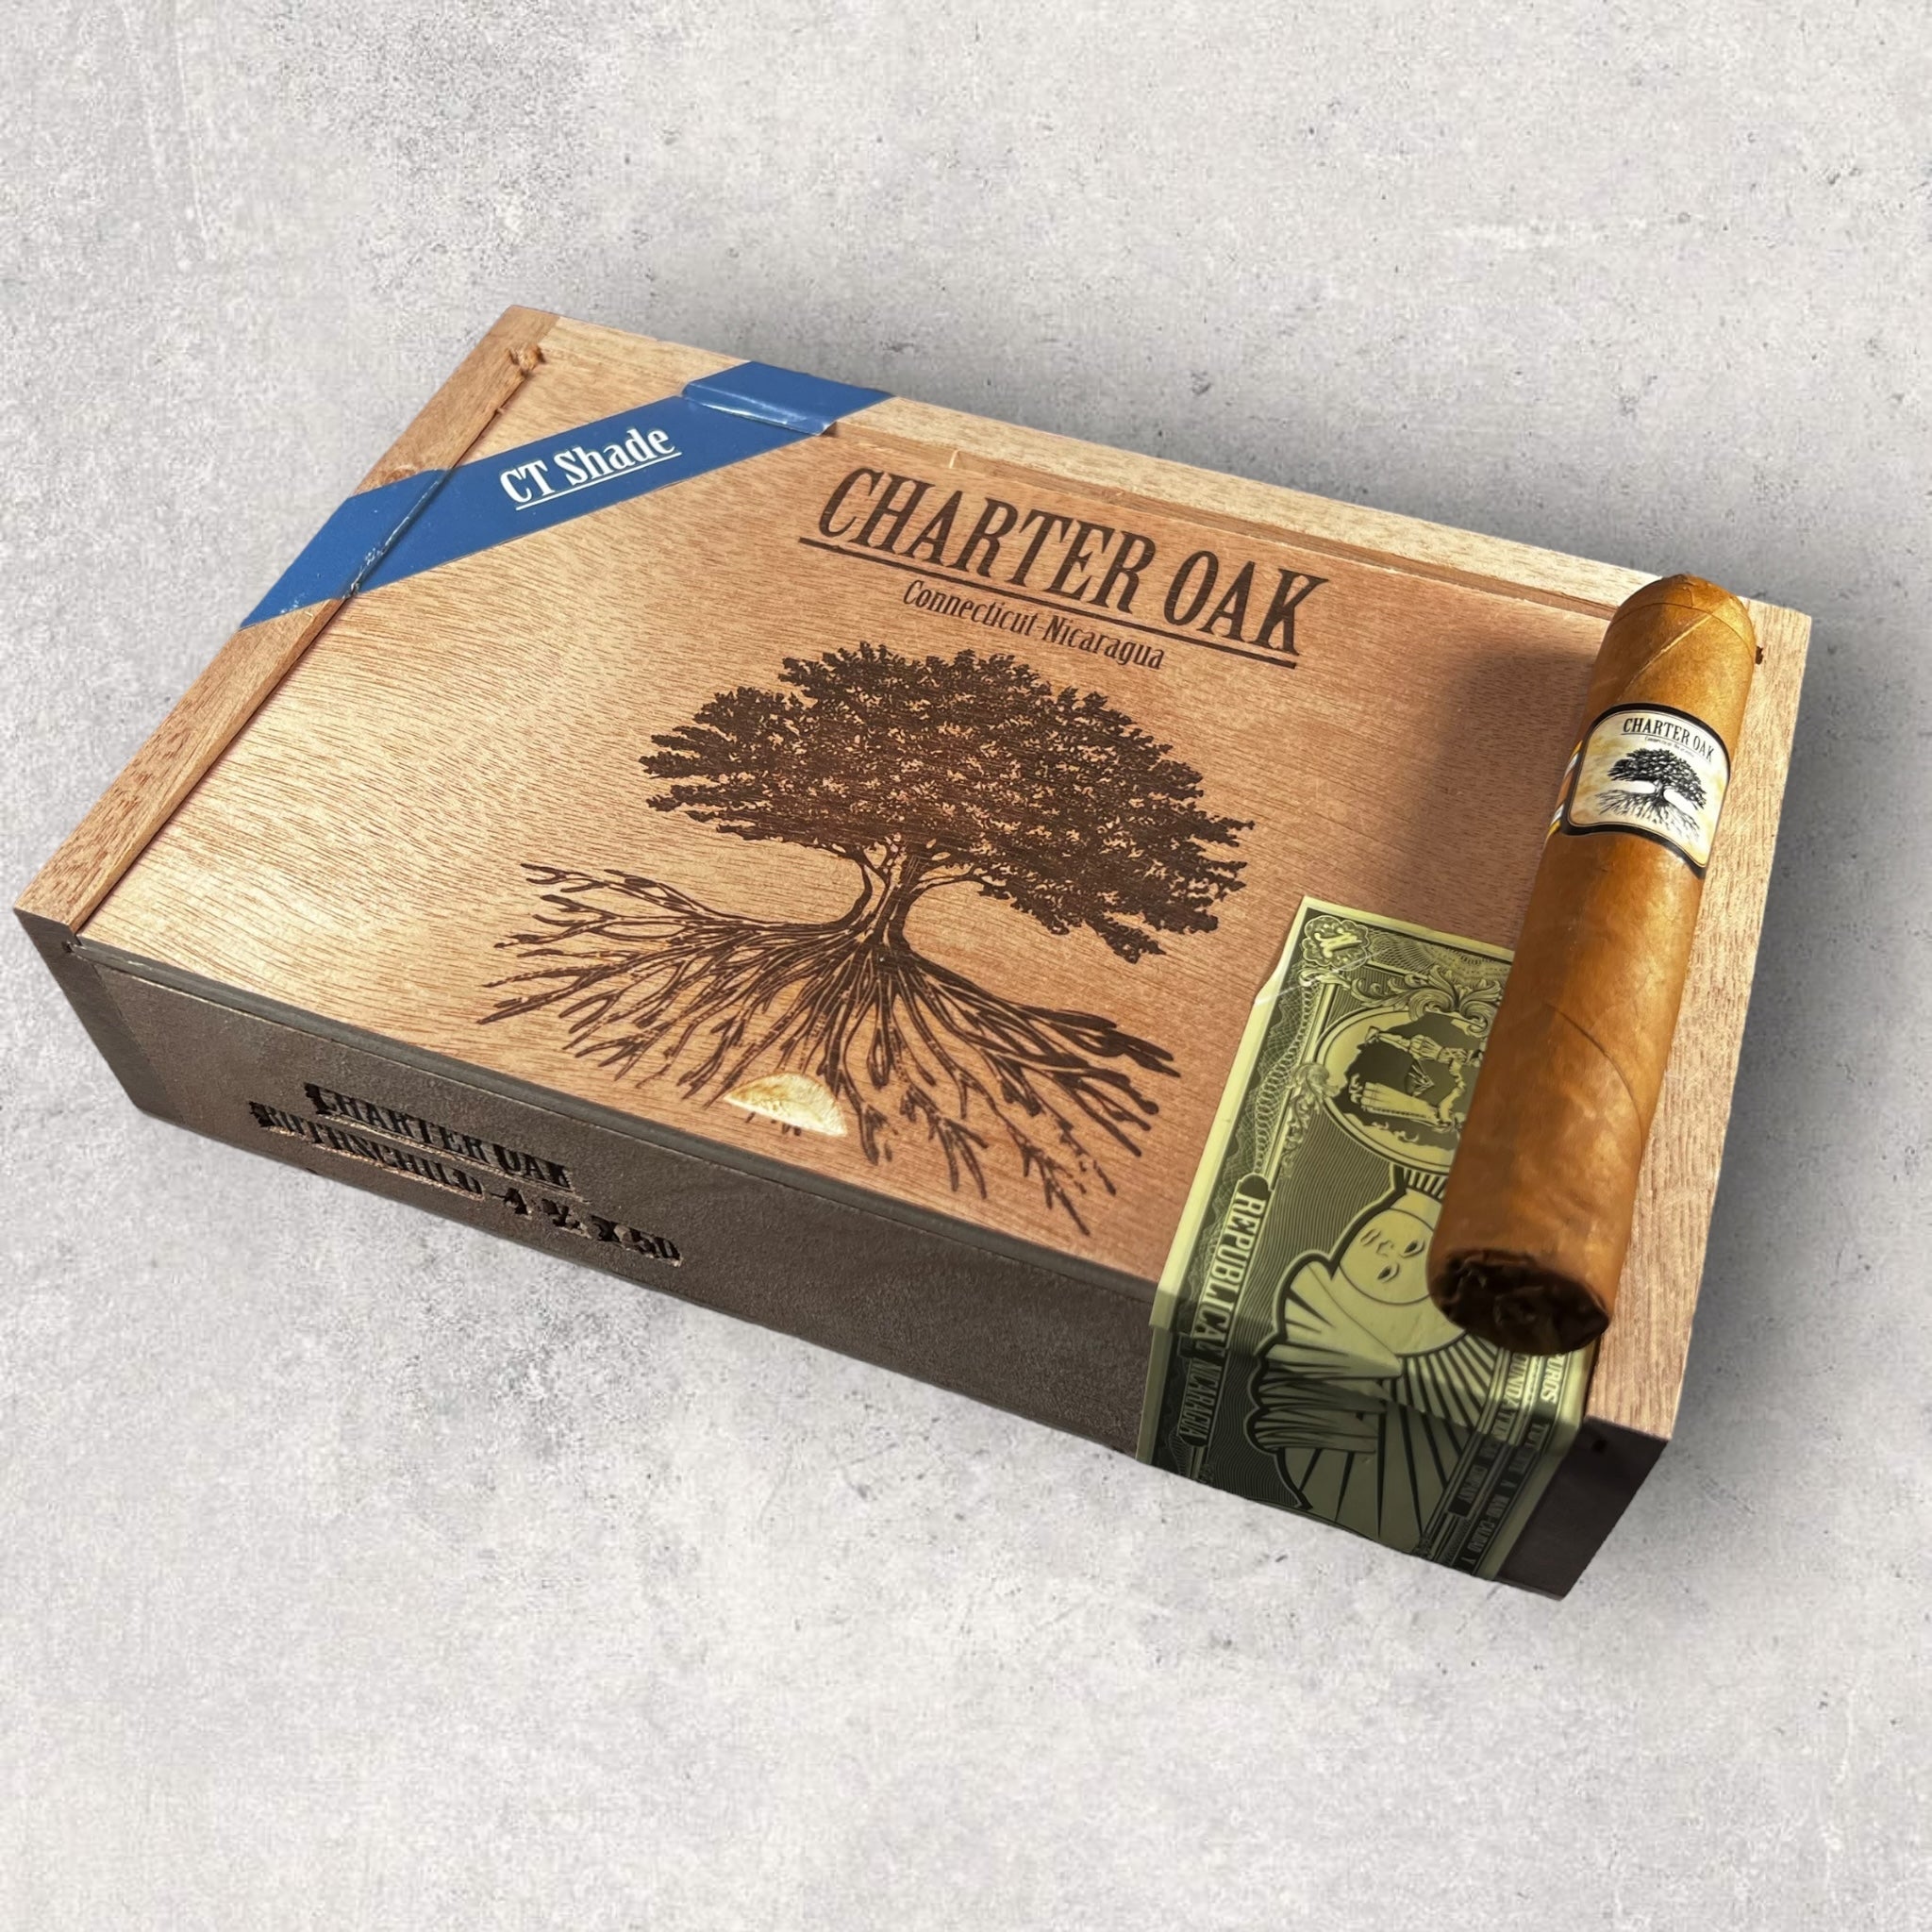 Foundation Charter Oak Connecticut Shade Rothschild - Cigar 30